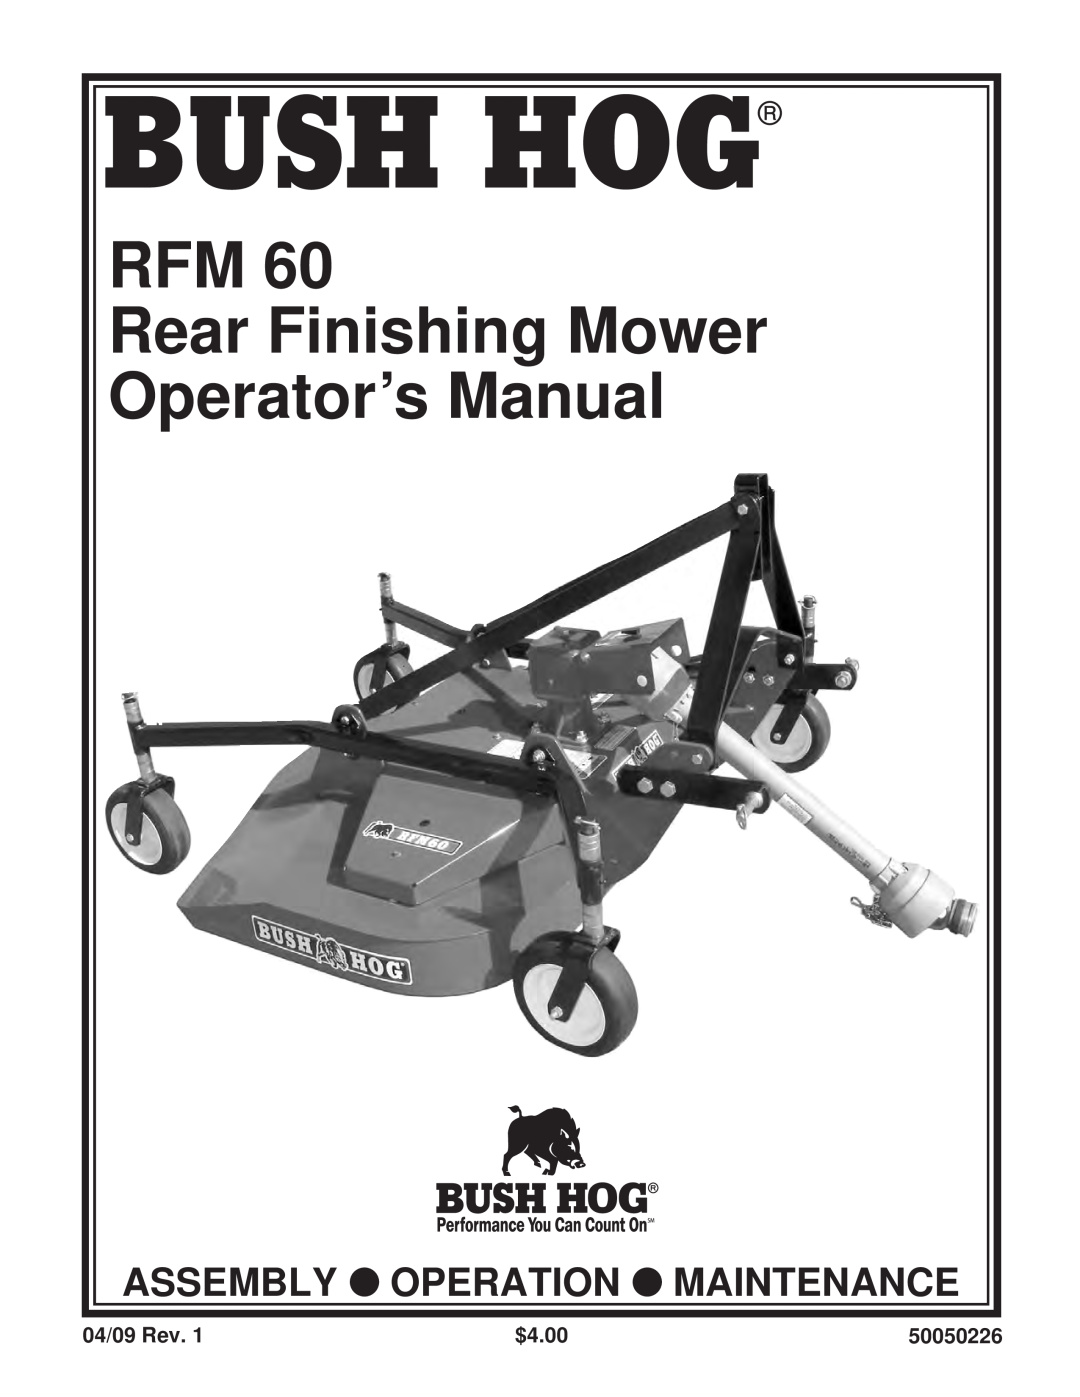 Bush Hog RFM 60 manual Bush Hog, RFM Rear Finishing Mower Operator’s Manual, Assembly Operation Maintenance 